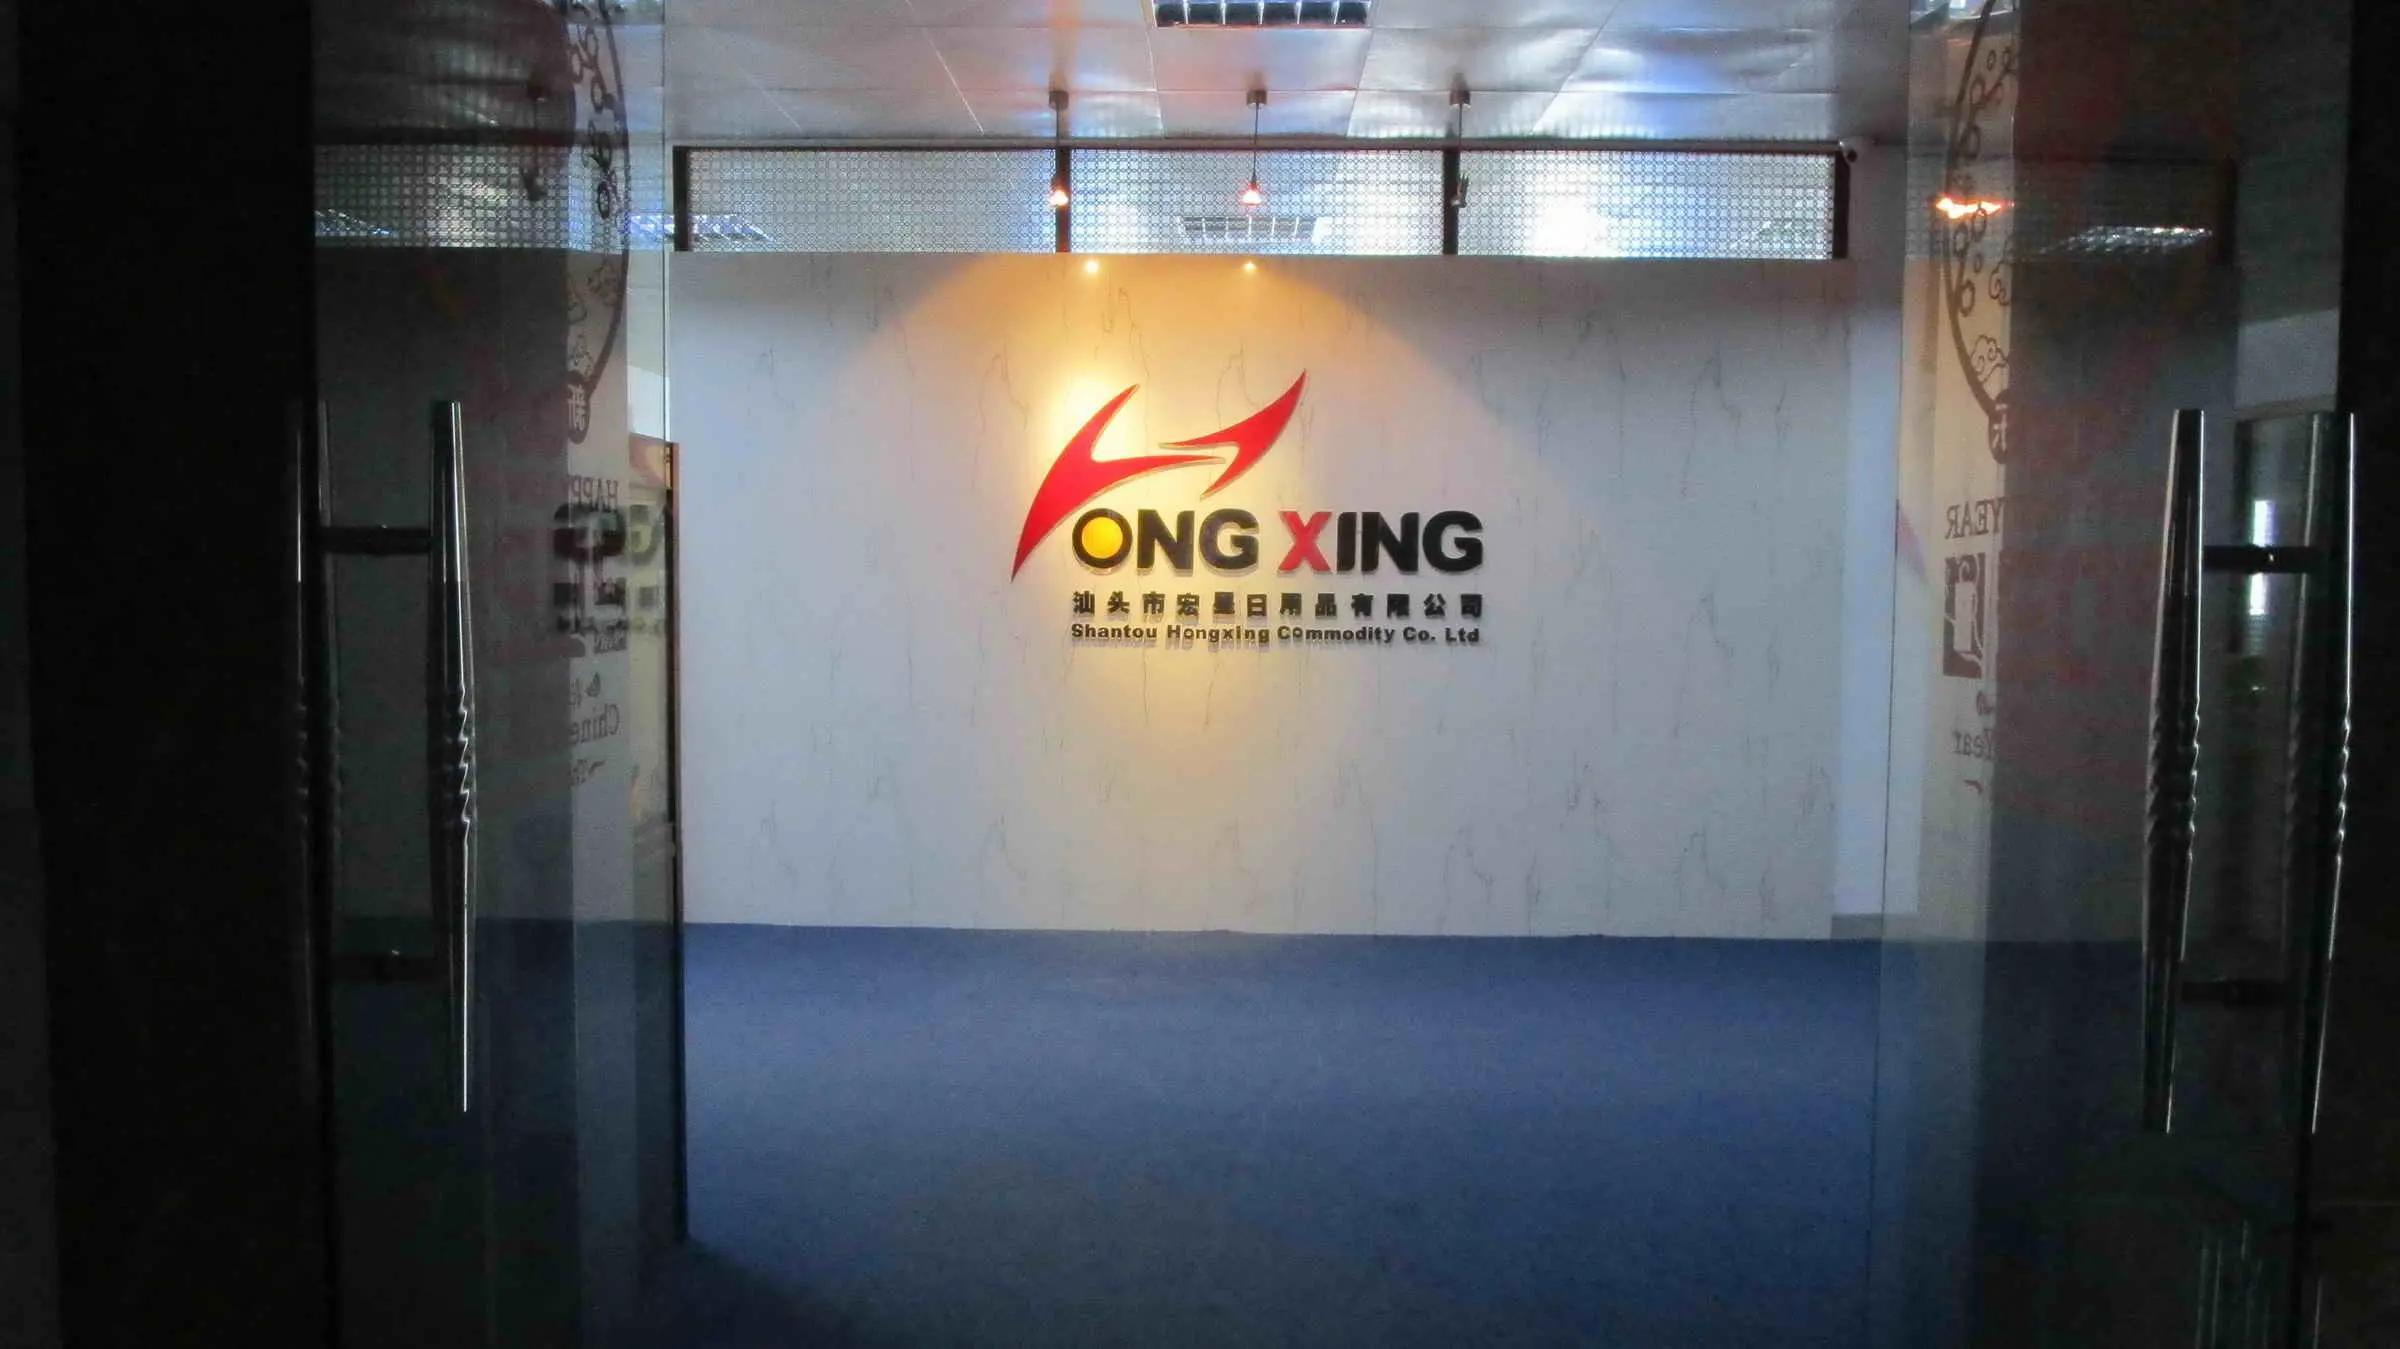 Shantou Hongxing Commodity Co., Ltd.